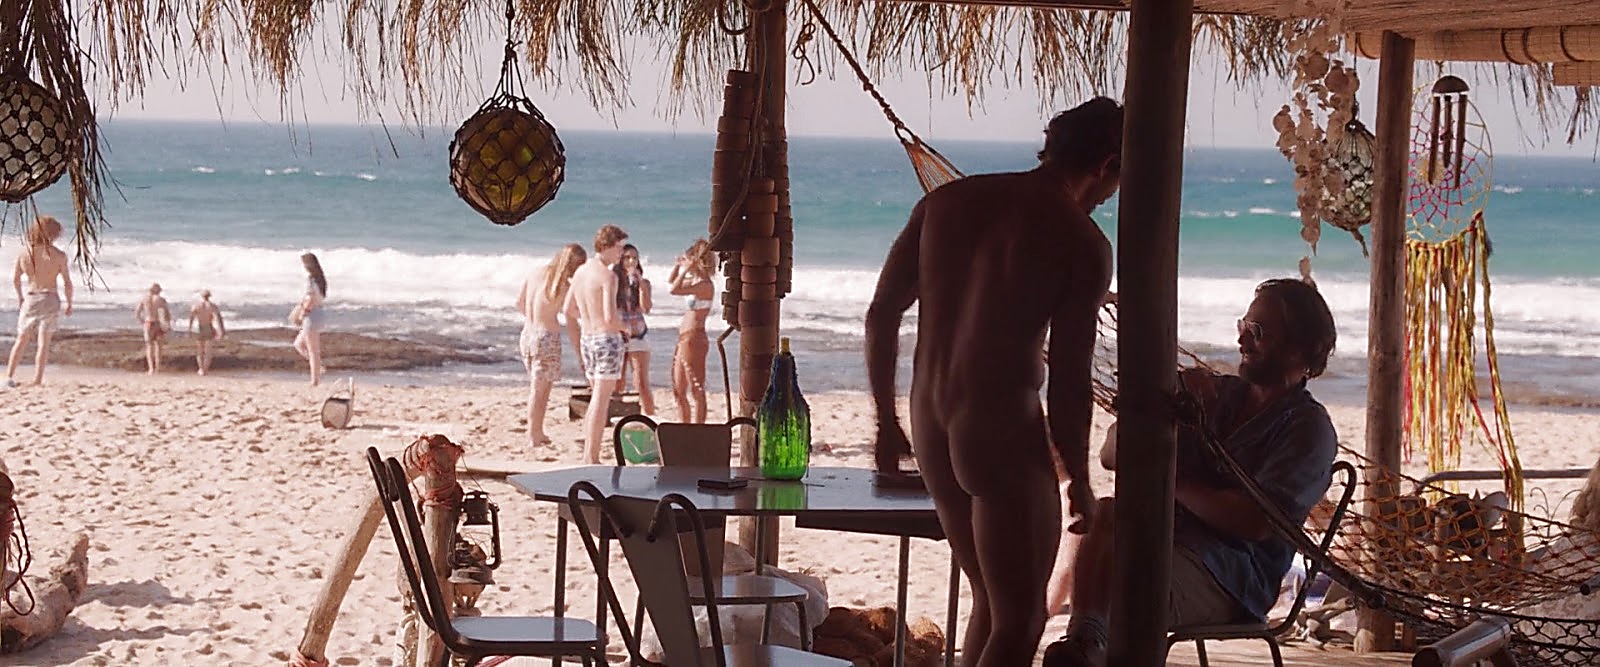 Michiel Huisman sexy shirtless scene July 31, 2019, 3pm